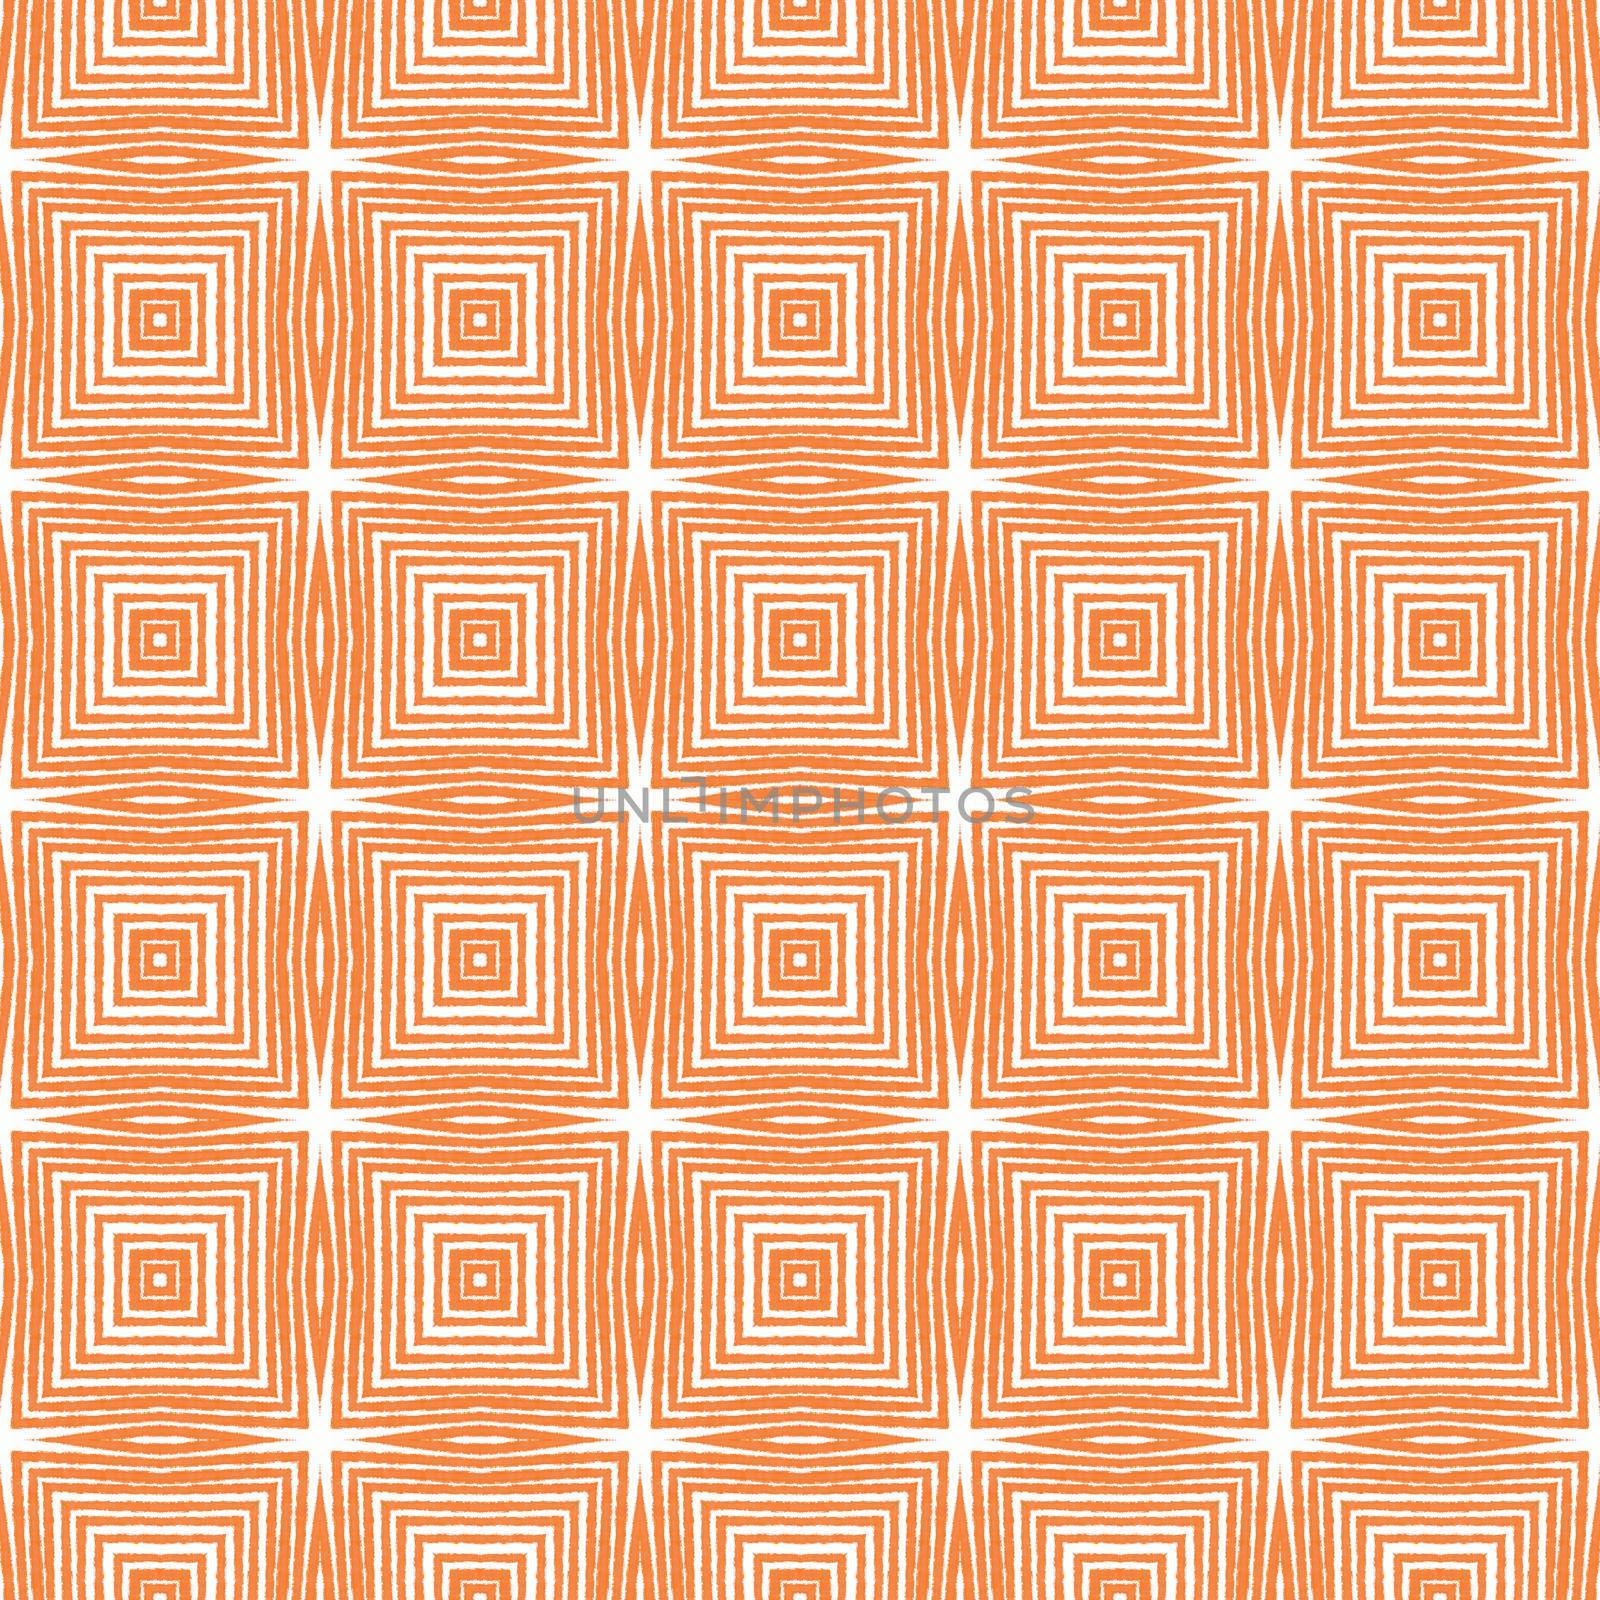 Arabesque hand drawn pattern. Orange symmetrical kaleidoscope background. Textile ready good-looking print, swimwear fabric, wallpaper, wrapping. Oriental arabesque hand drawn design.